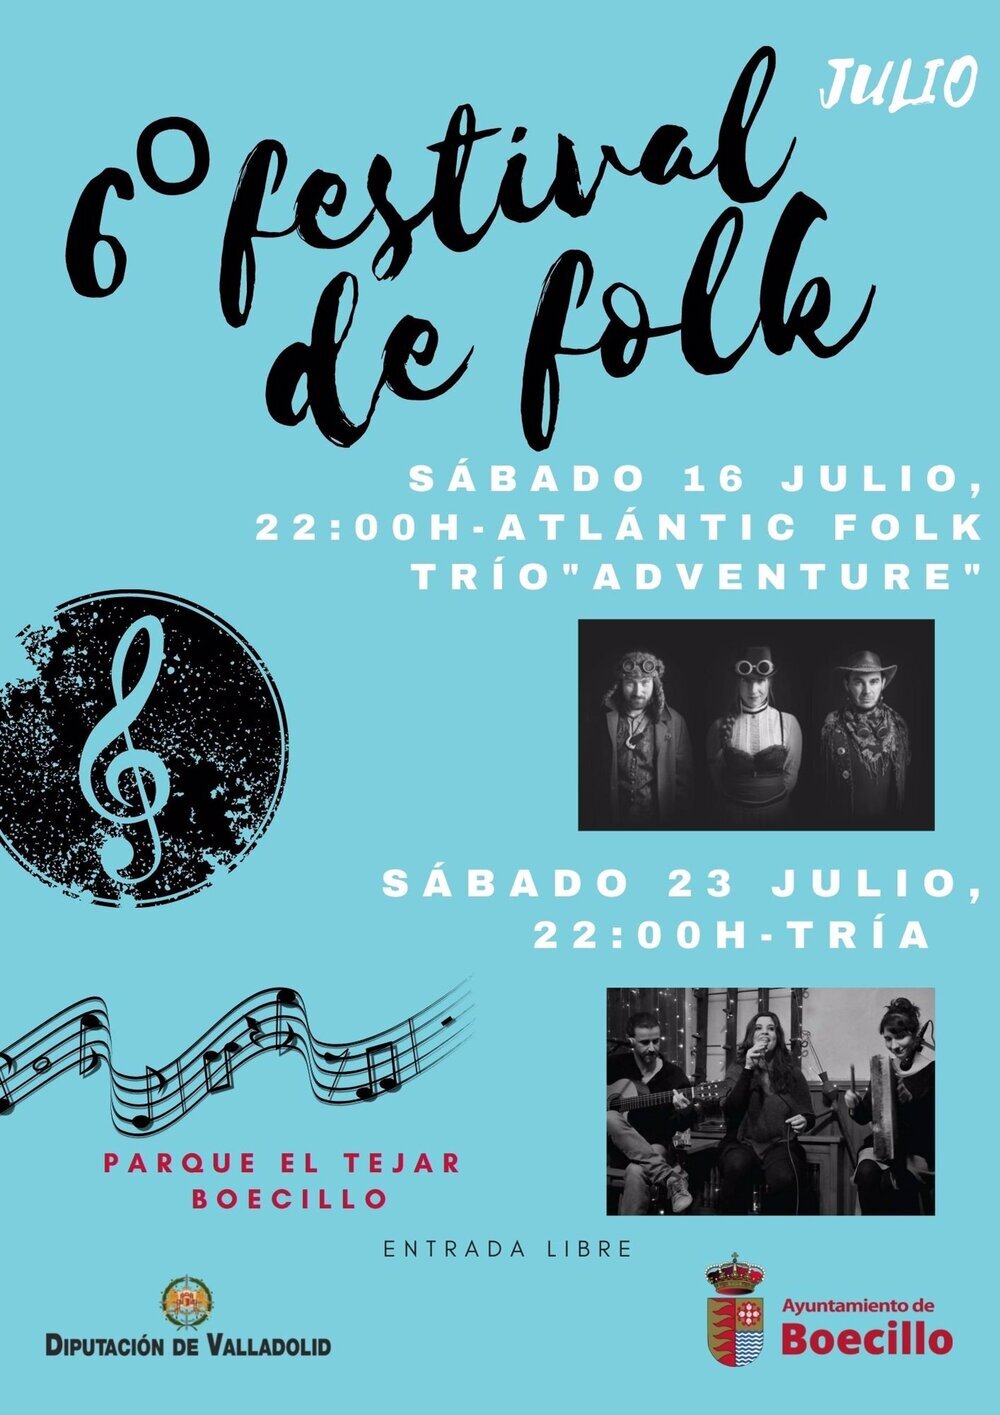 El festival de folk de Boecillo regresa este fin de semana